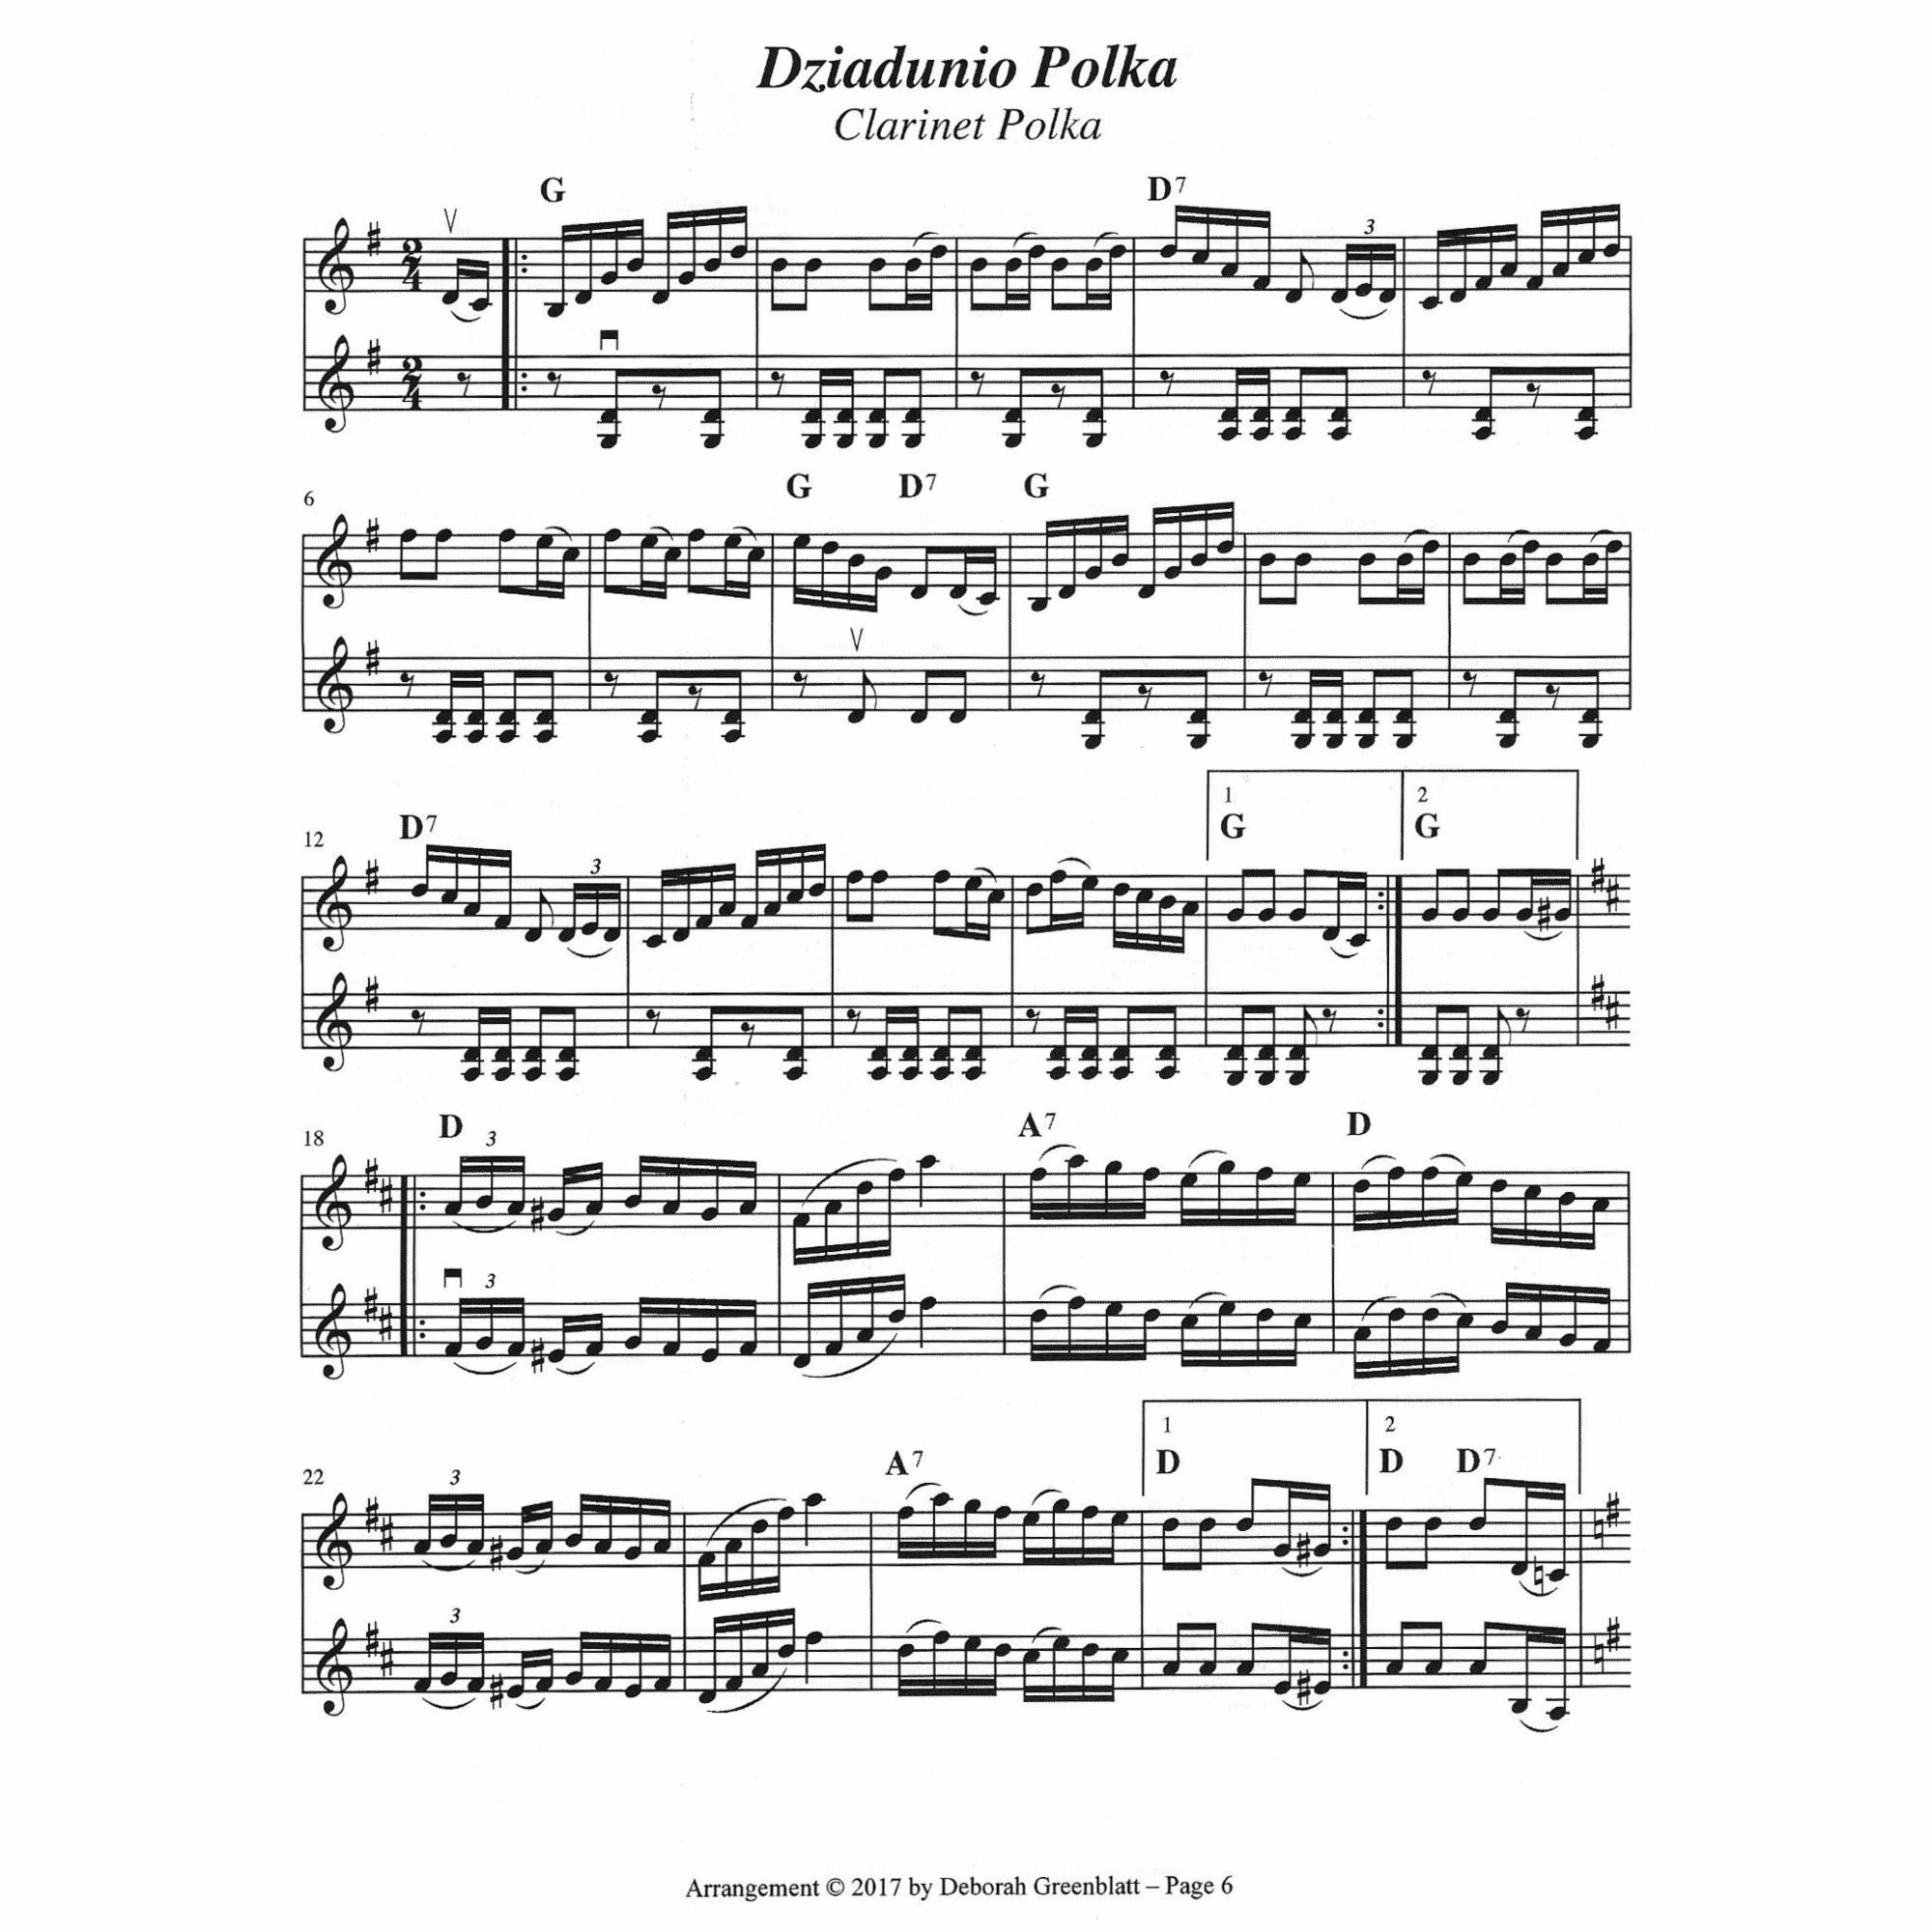 Sample: Two Violins (Pg. 6)